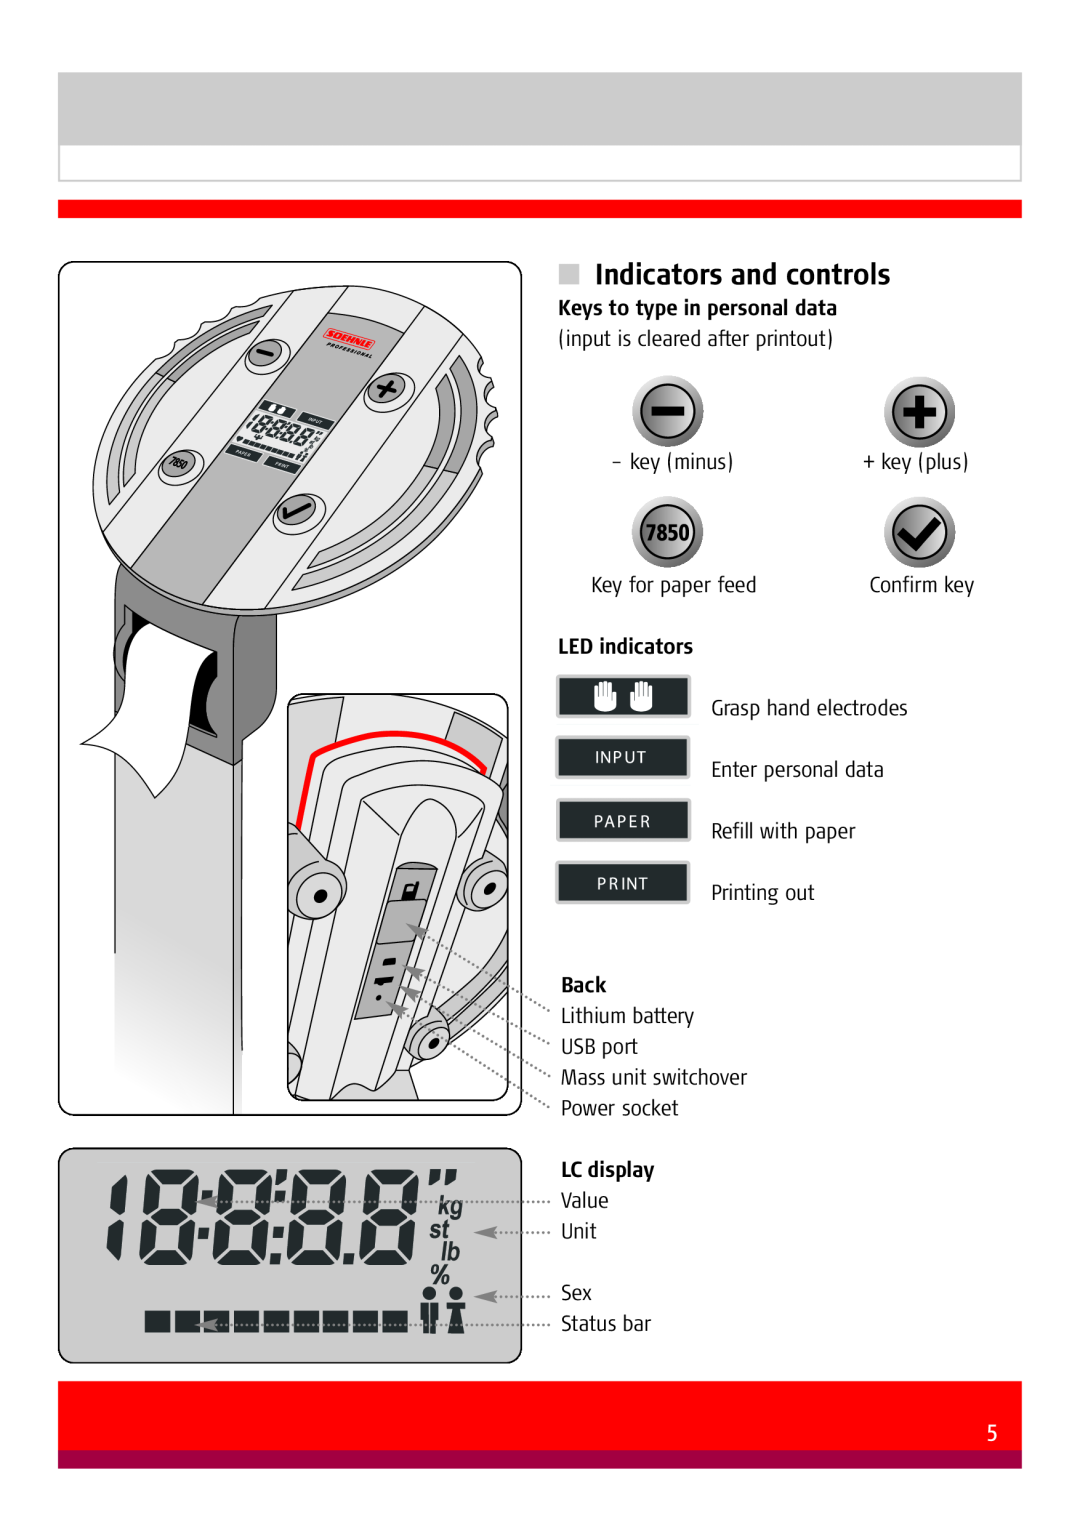 Soehnle 7850 manual Indicators and controls, Keys to type in personal data, LED indicators, Back, LC display, + key plus 